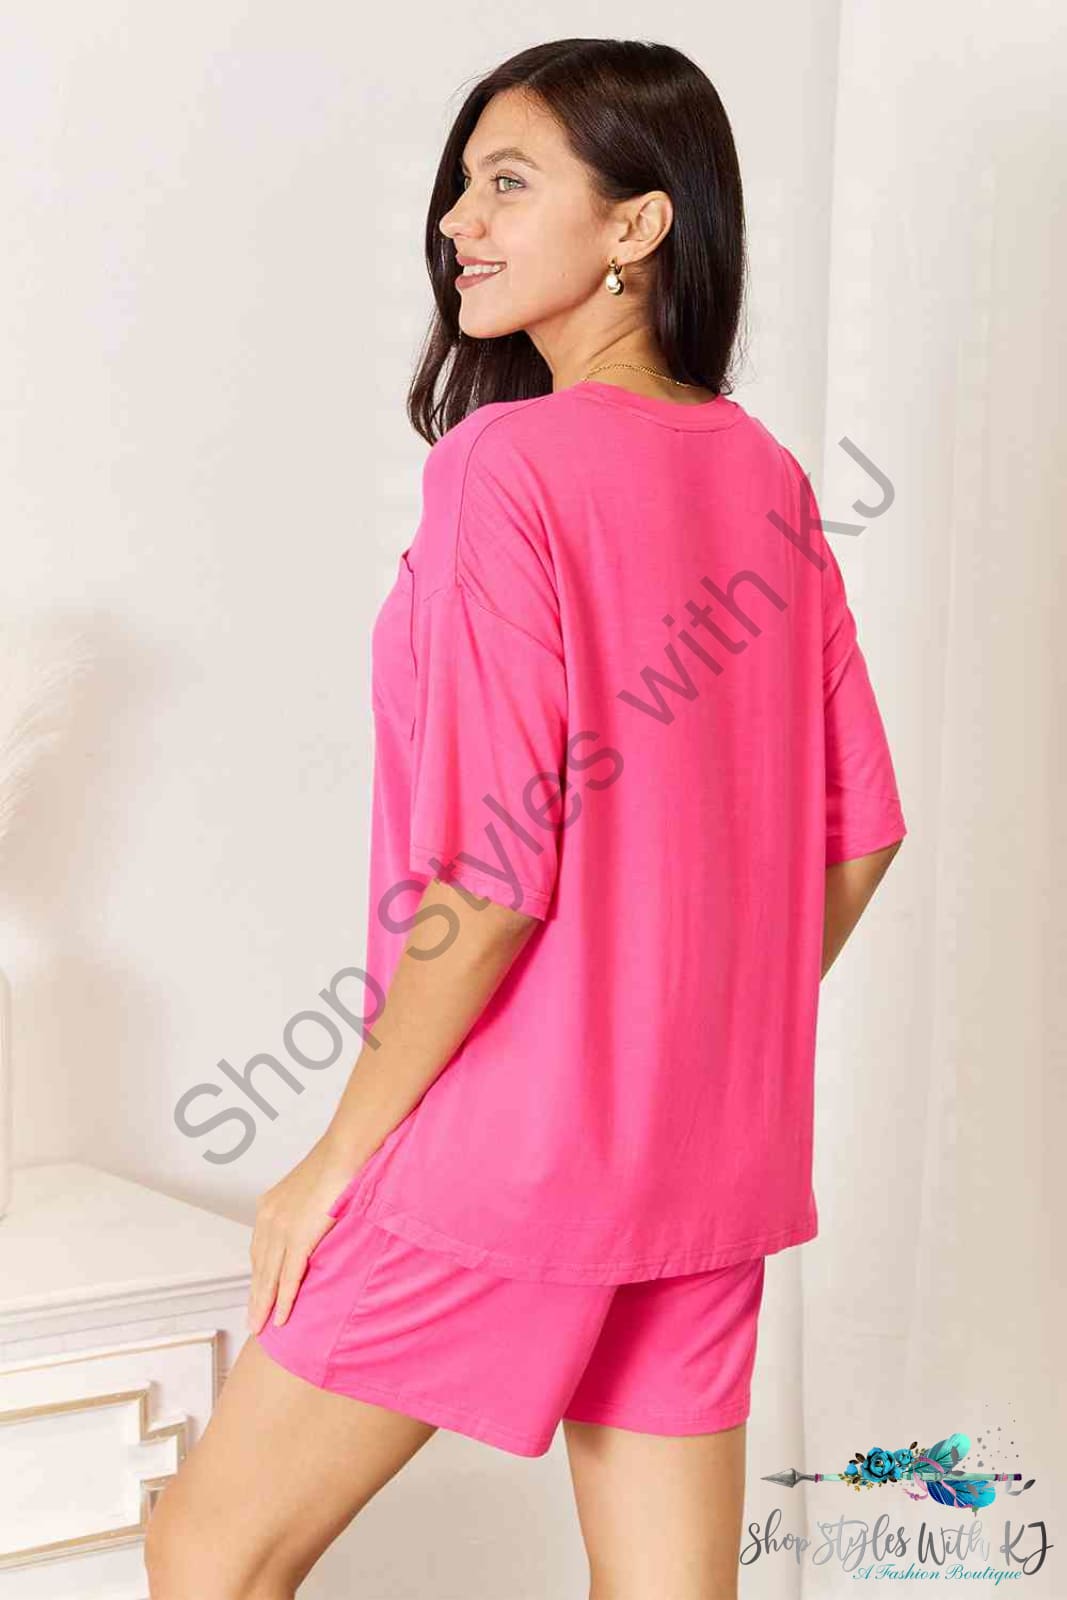 Basic Bae Full Size Soft Rayon Half Sleeve Top And Shorts Set Lounge